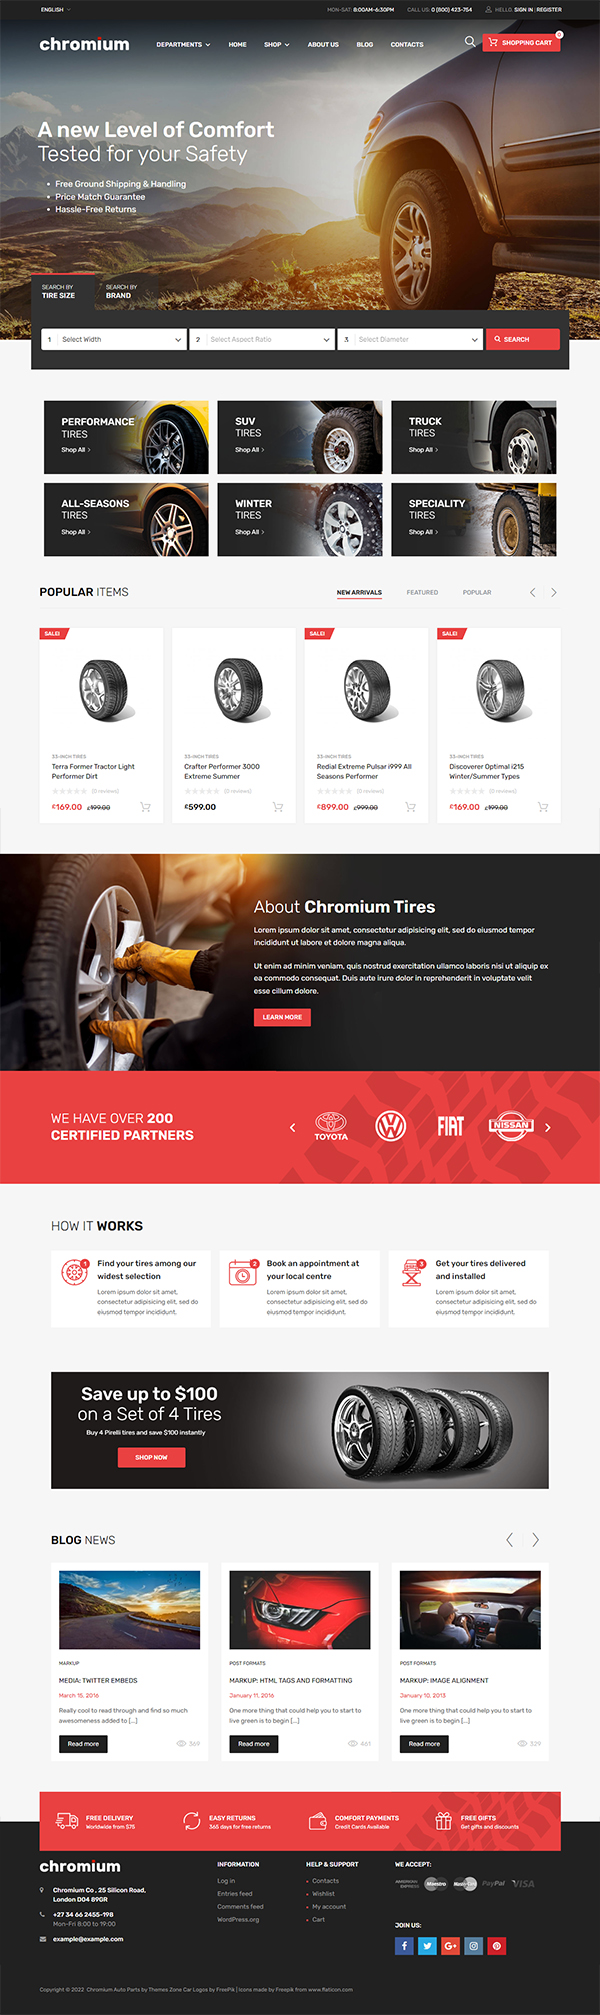 Chromium – Auto Parts Shop WordPress WooCommerce Theme